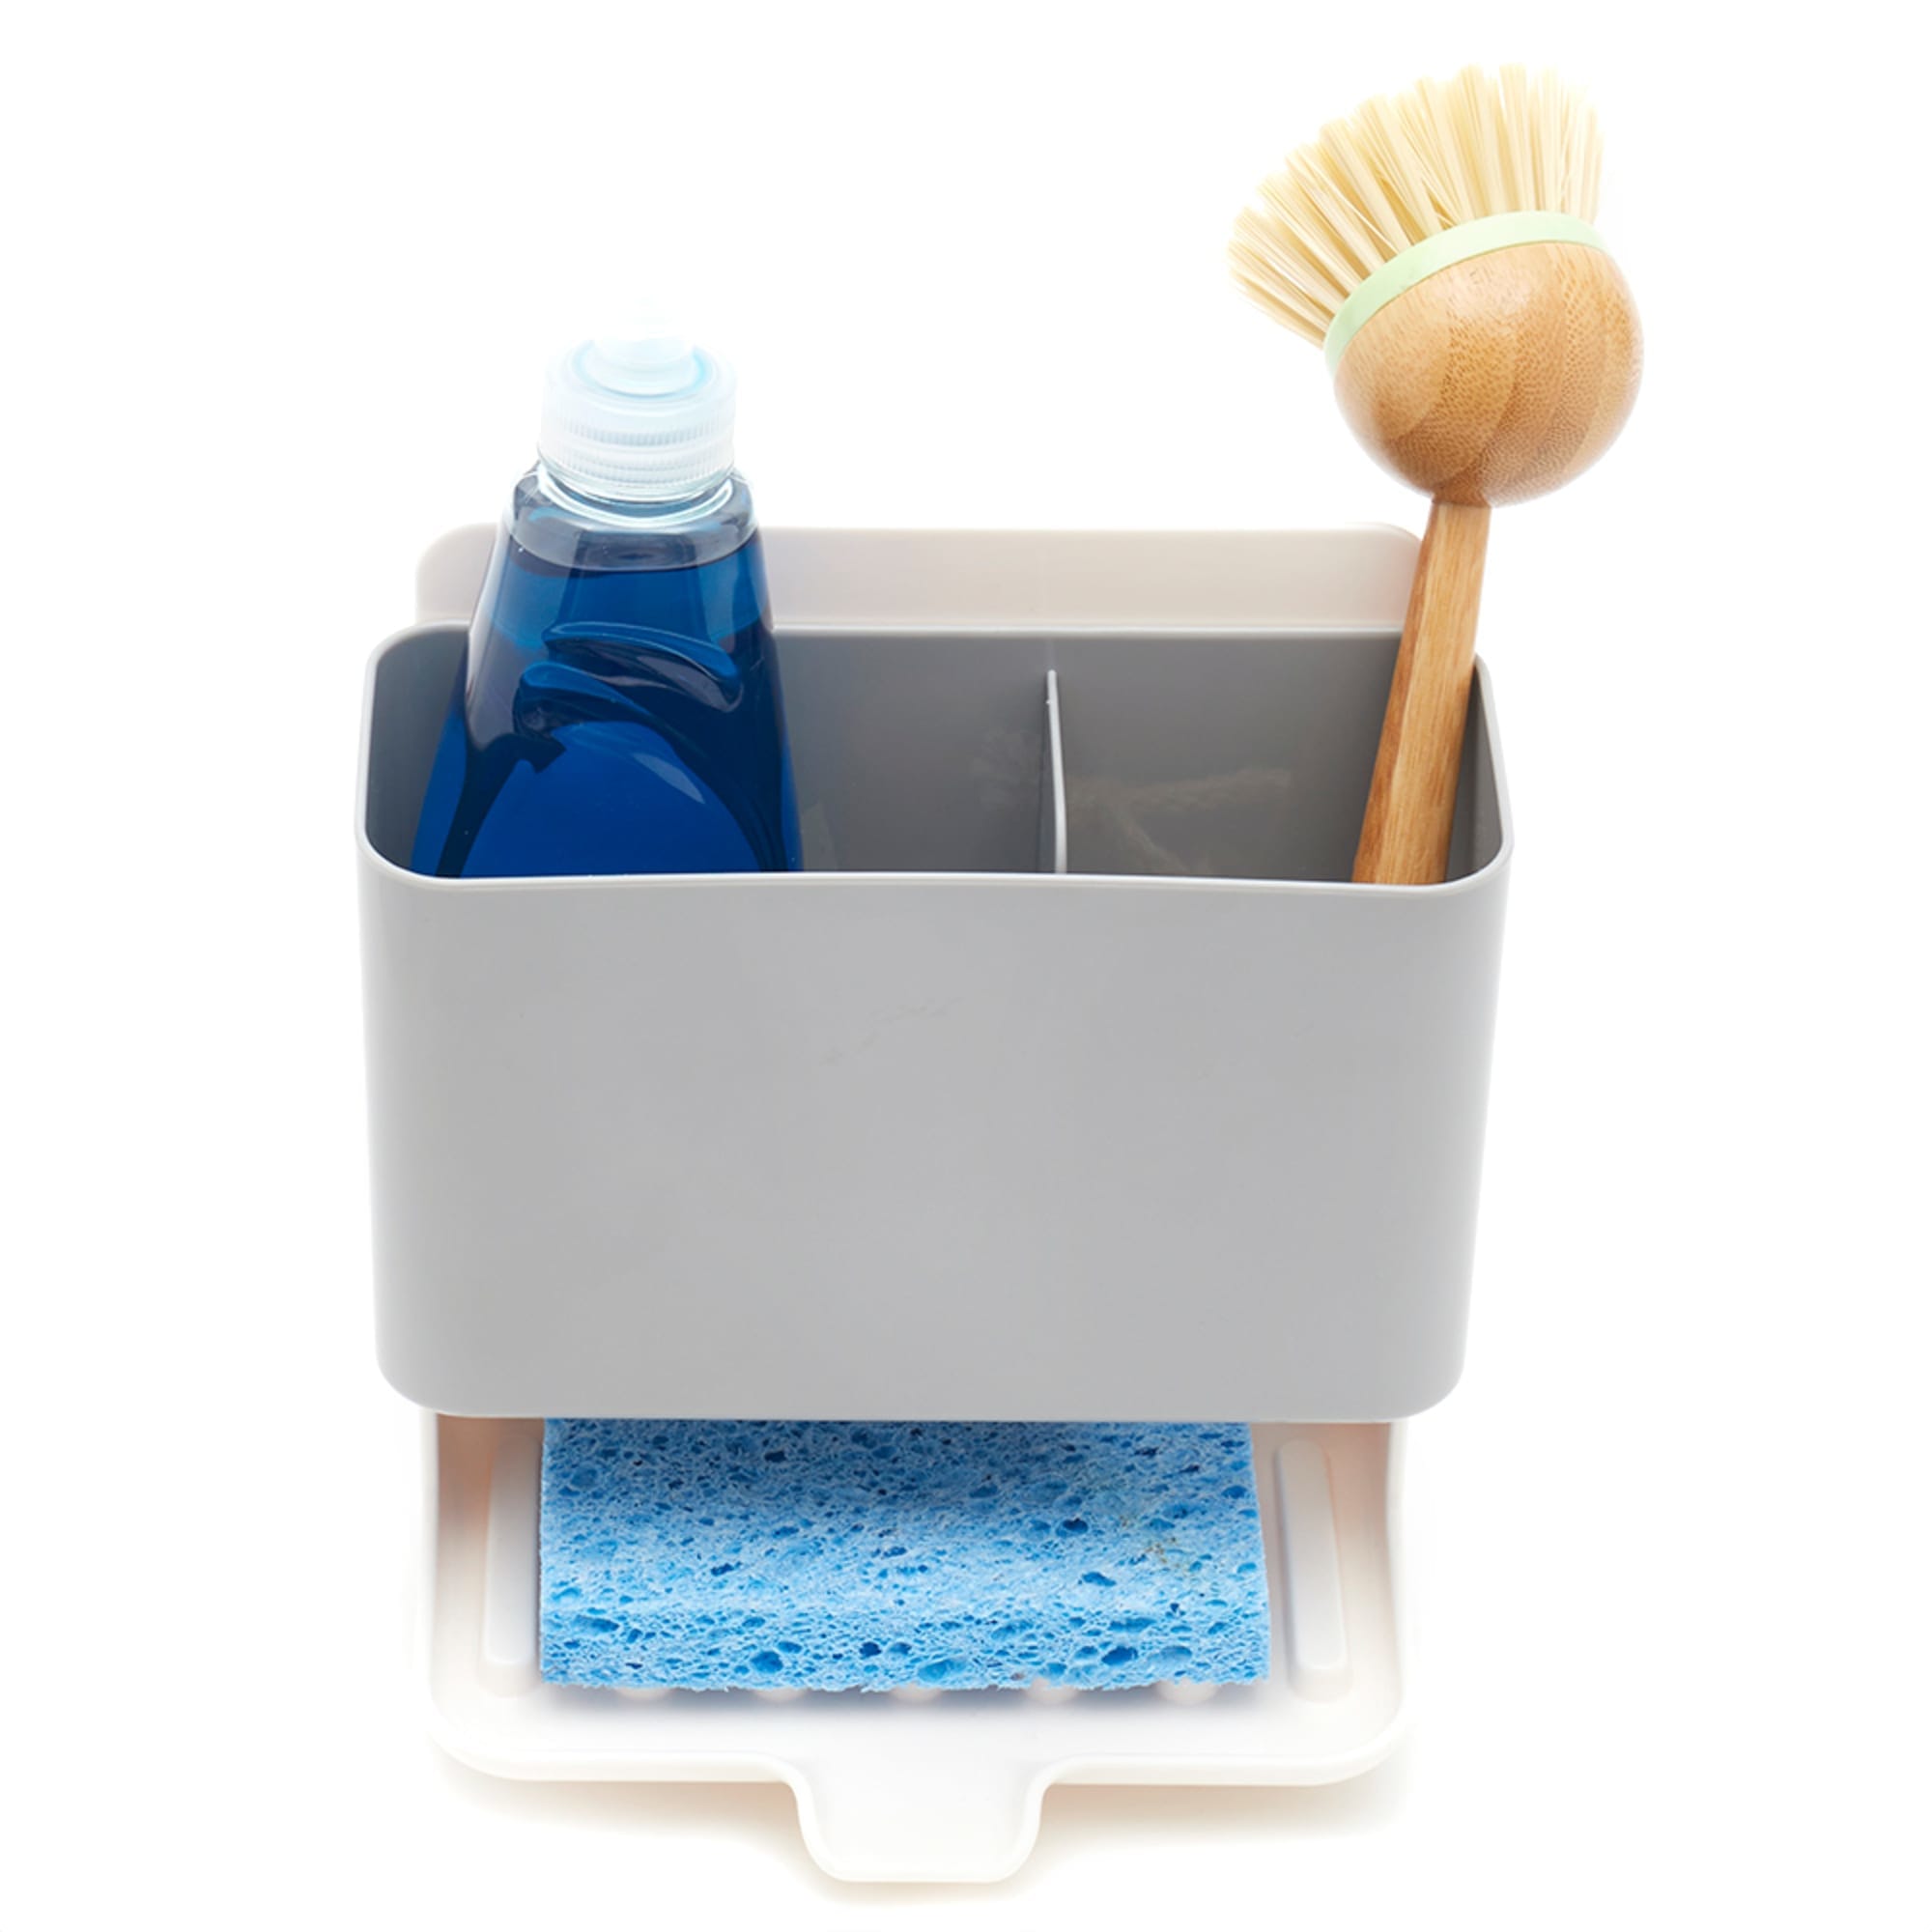 Home Basics Deluxe Kitchen Sink Organizer Sponge Holder, Grey $6.00 EACH, CASE PACK OF 12